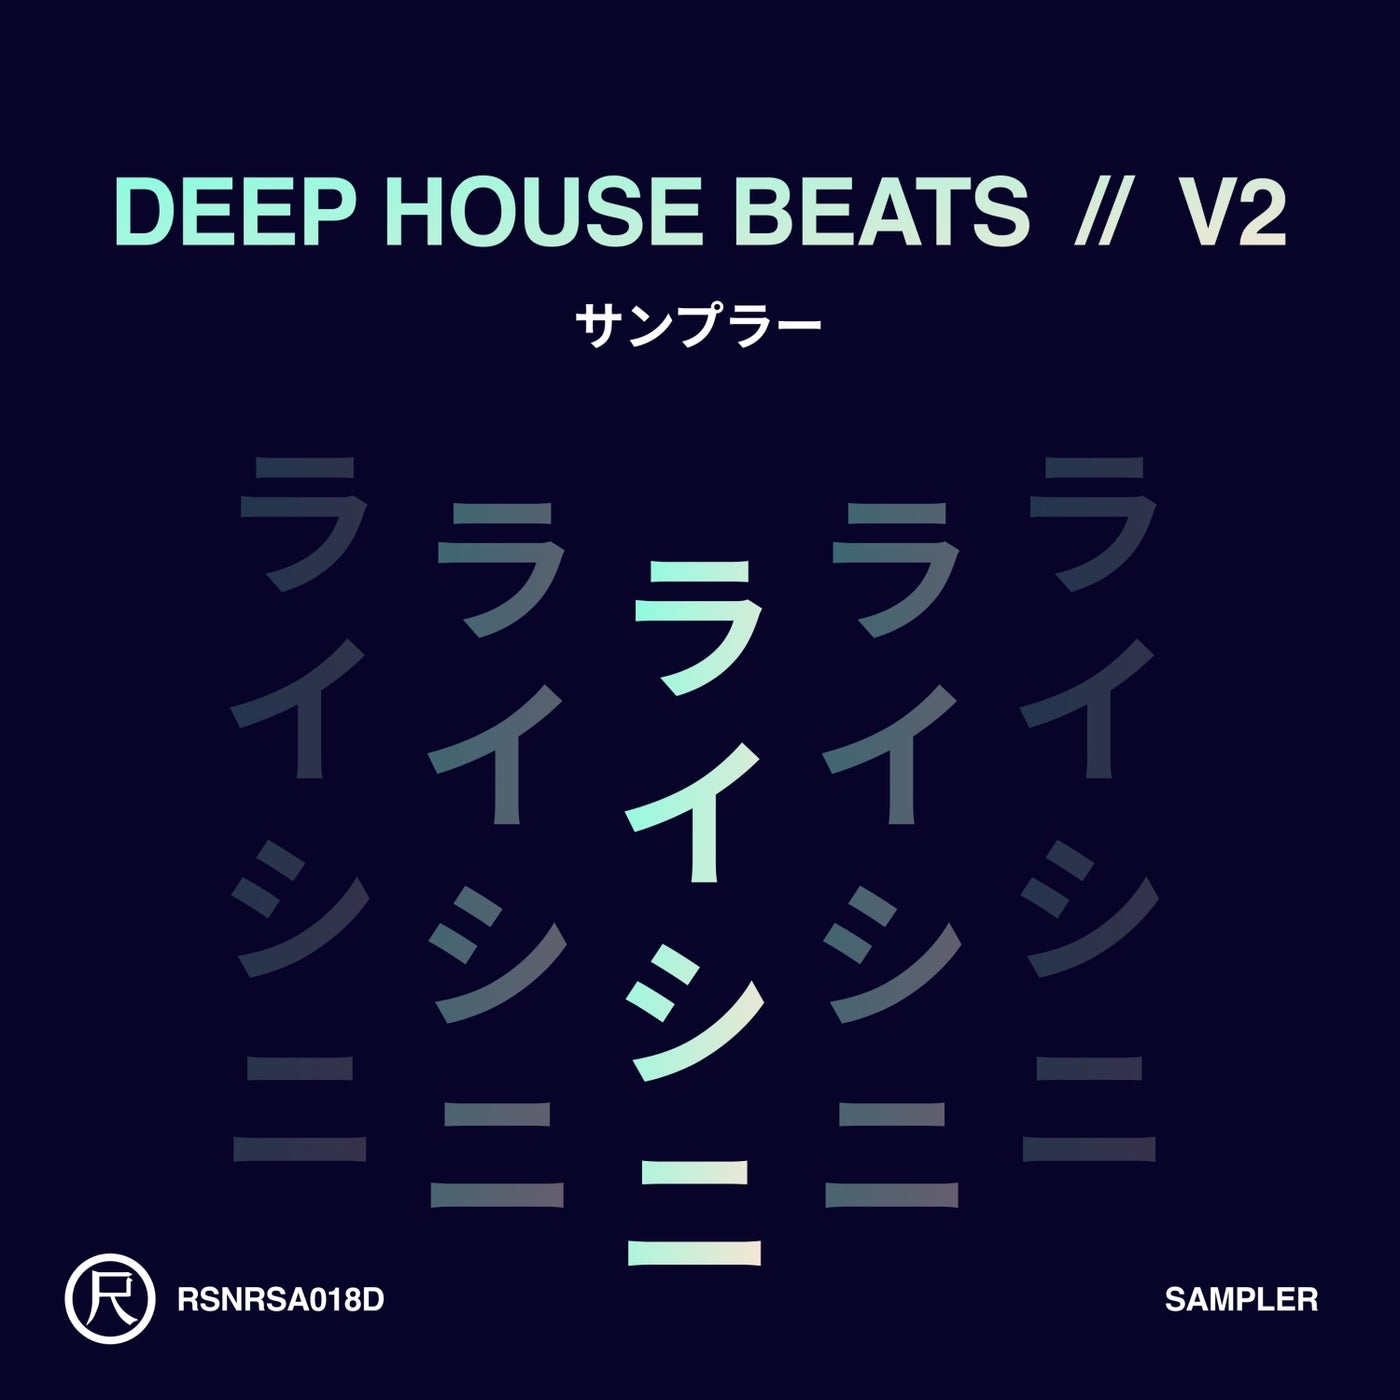 Deep House Beats V2 (Sampler)